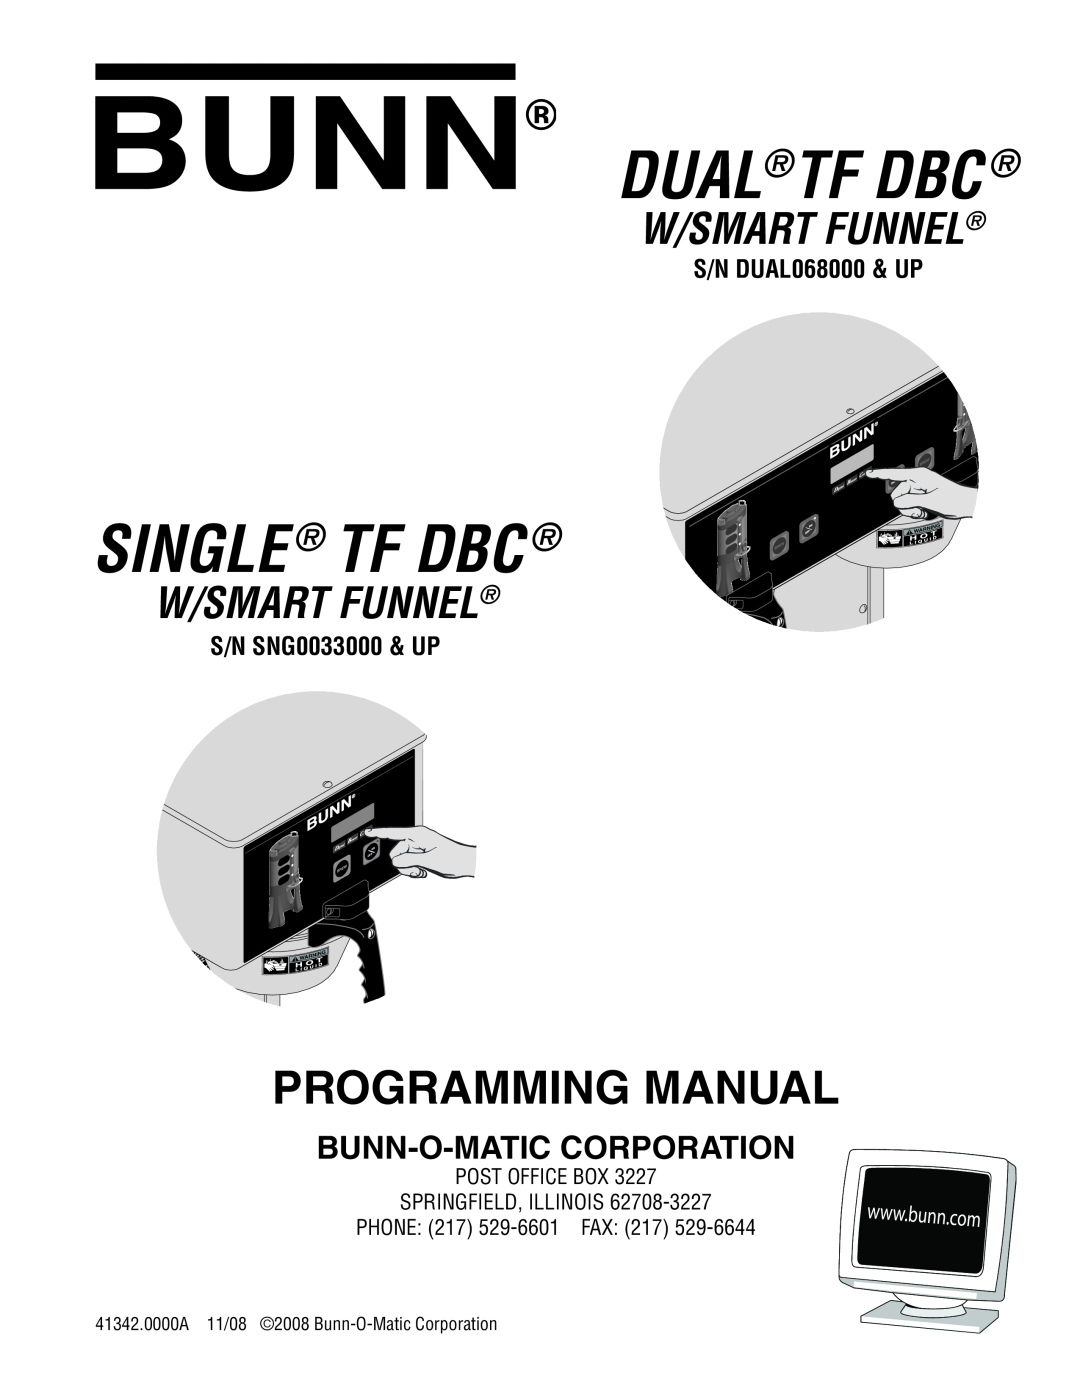 Bunn manual S/N DUAL068000 & UP, S/N SNG0033000 & UP, Dualtf Dbc, Single Tf Dbc, Programming Manual, W/Smart Funnel 